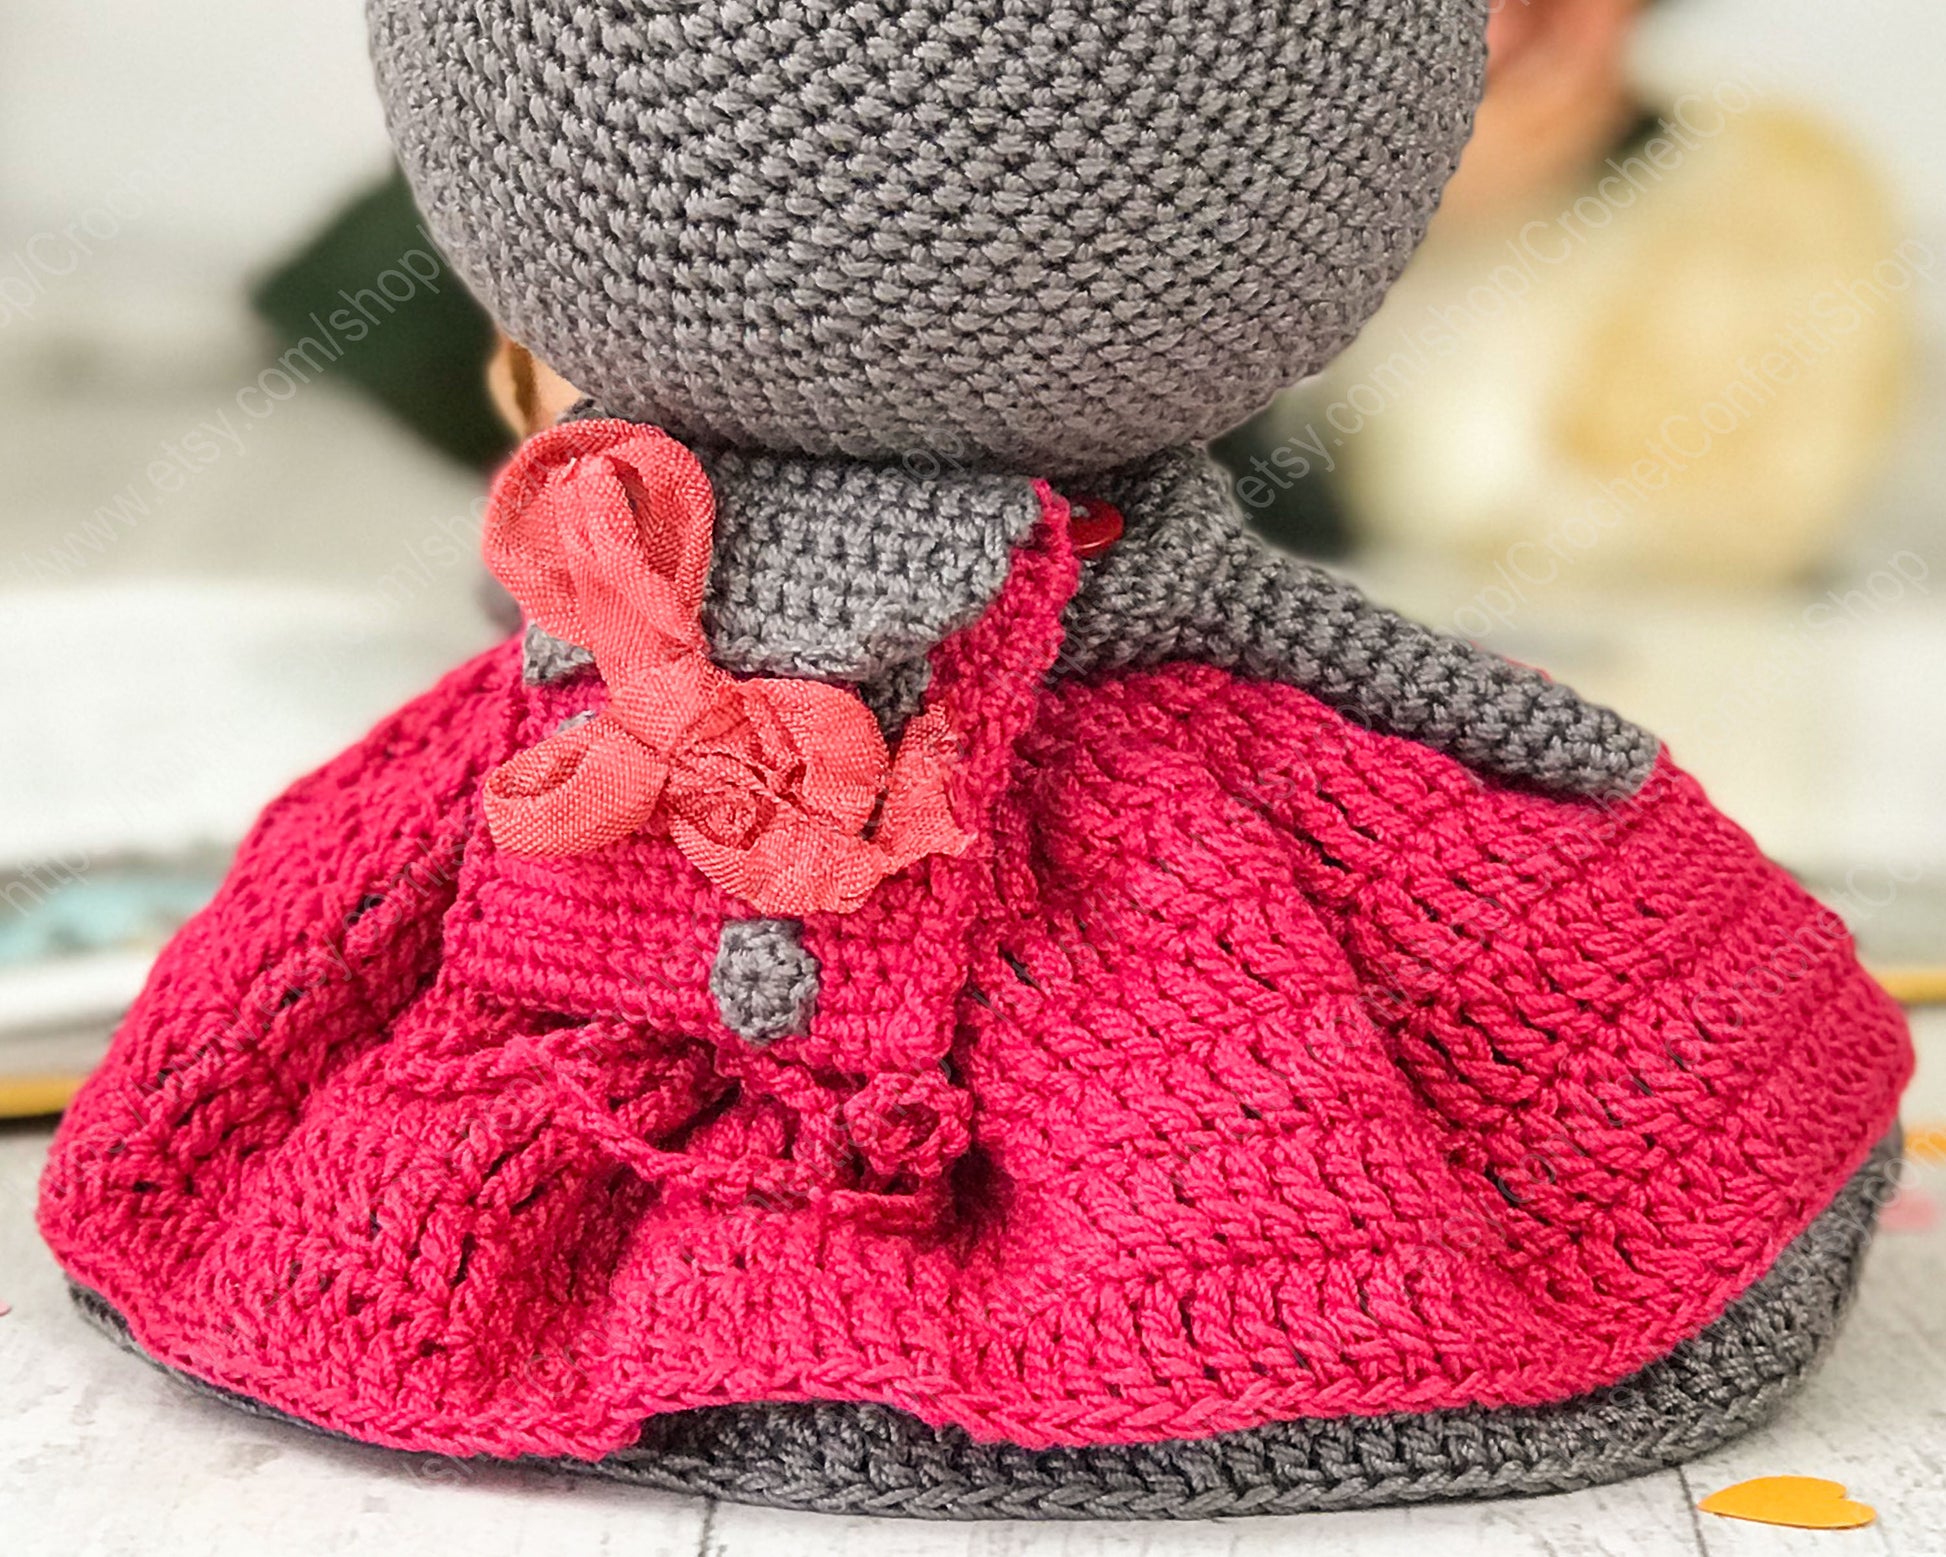 Amigurumi Pattern Doll Crochet for Little Red Riding Hood PDF 